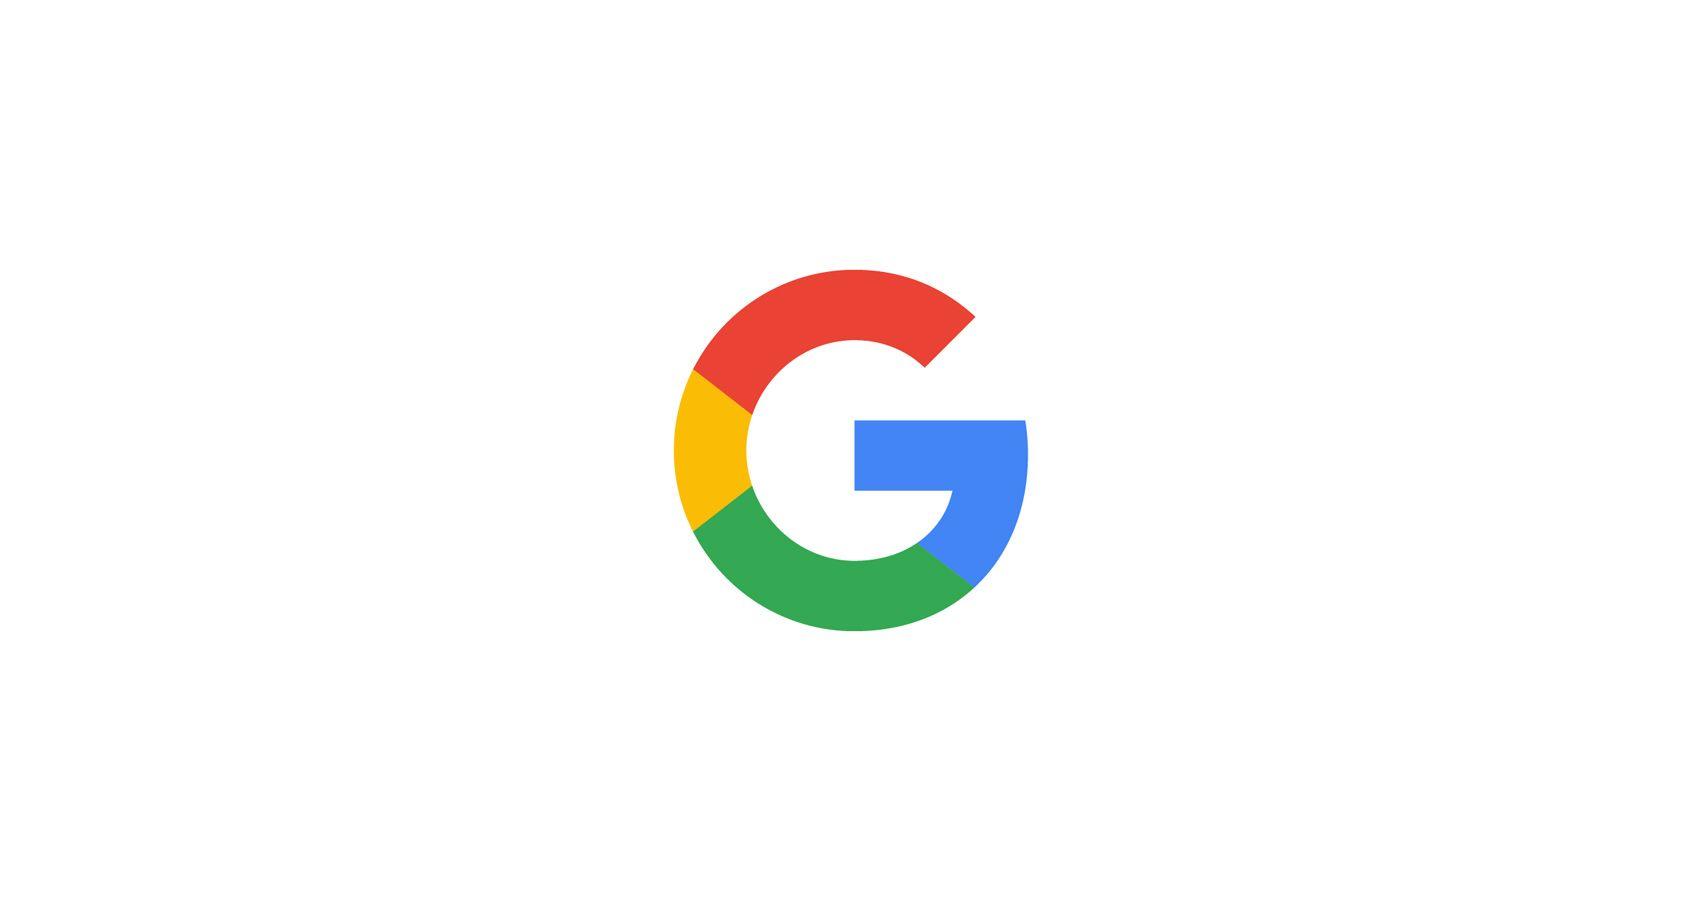 Google Logo - Evolving the Google Identity - Library - Google Design